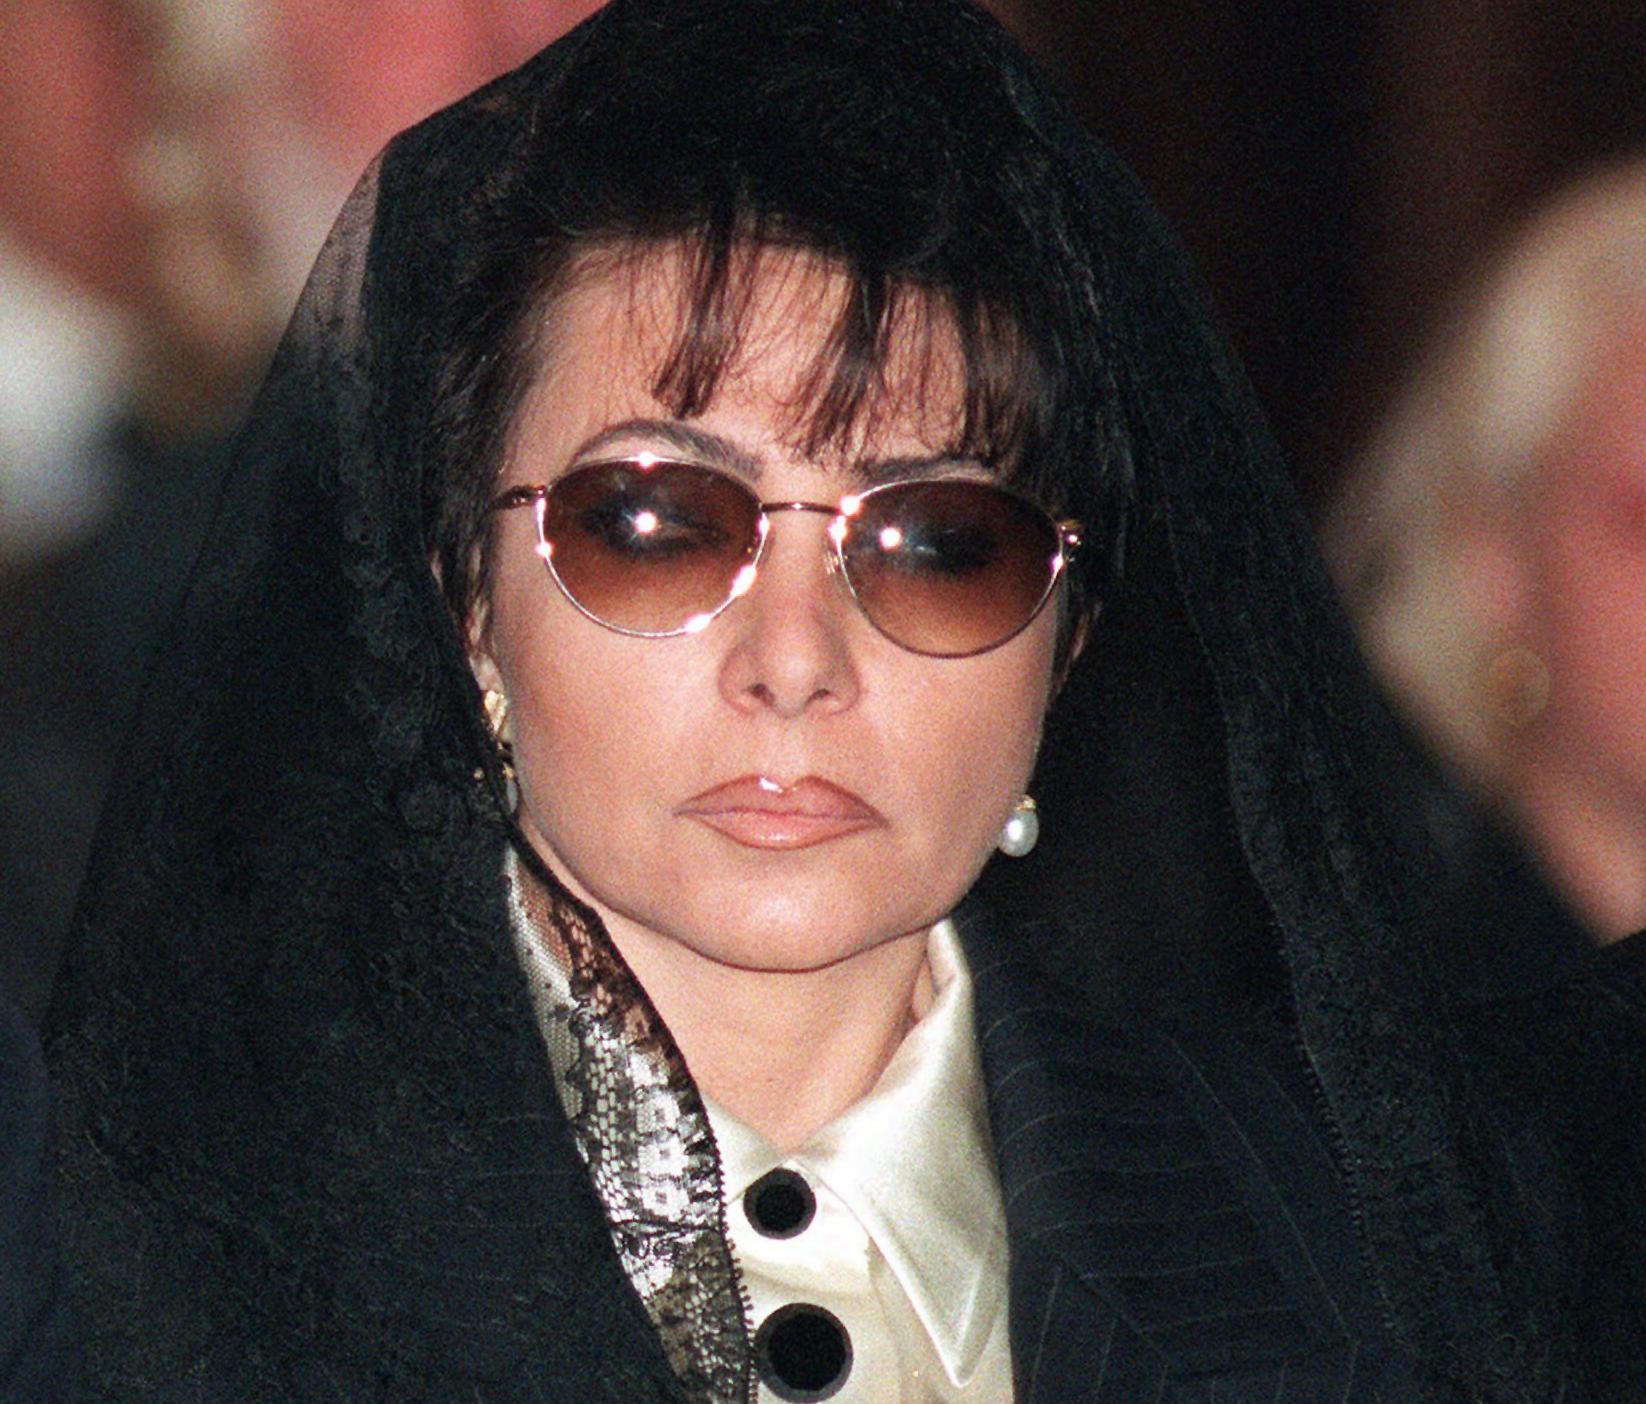 Patrizia Reggiani på ex-makens begravning 1995.